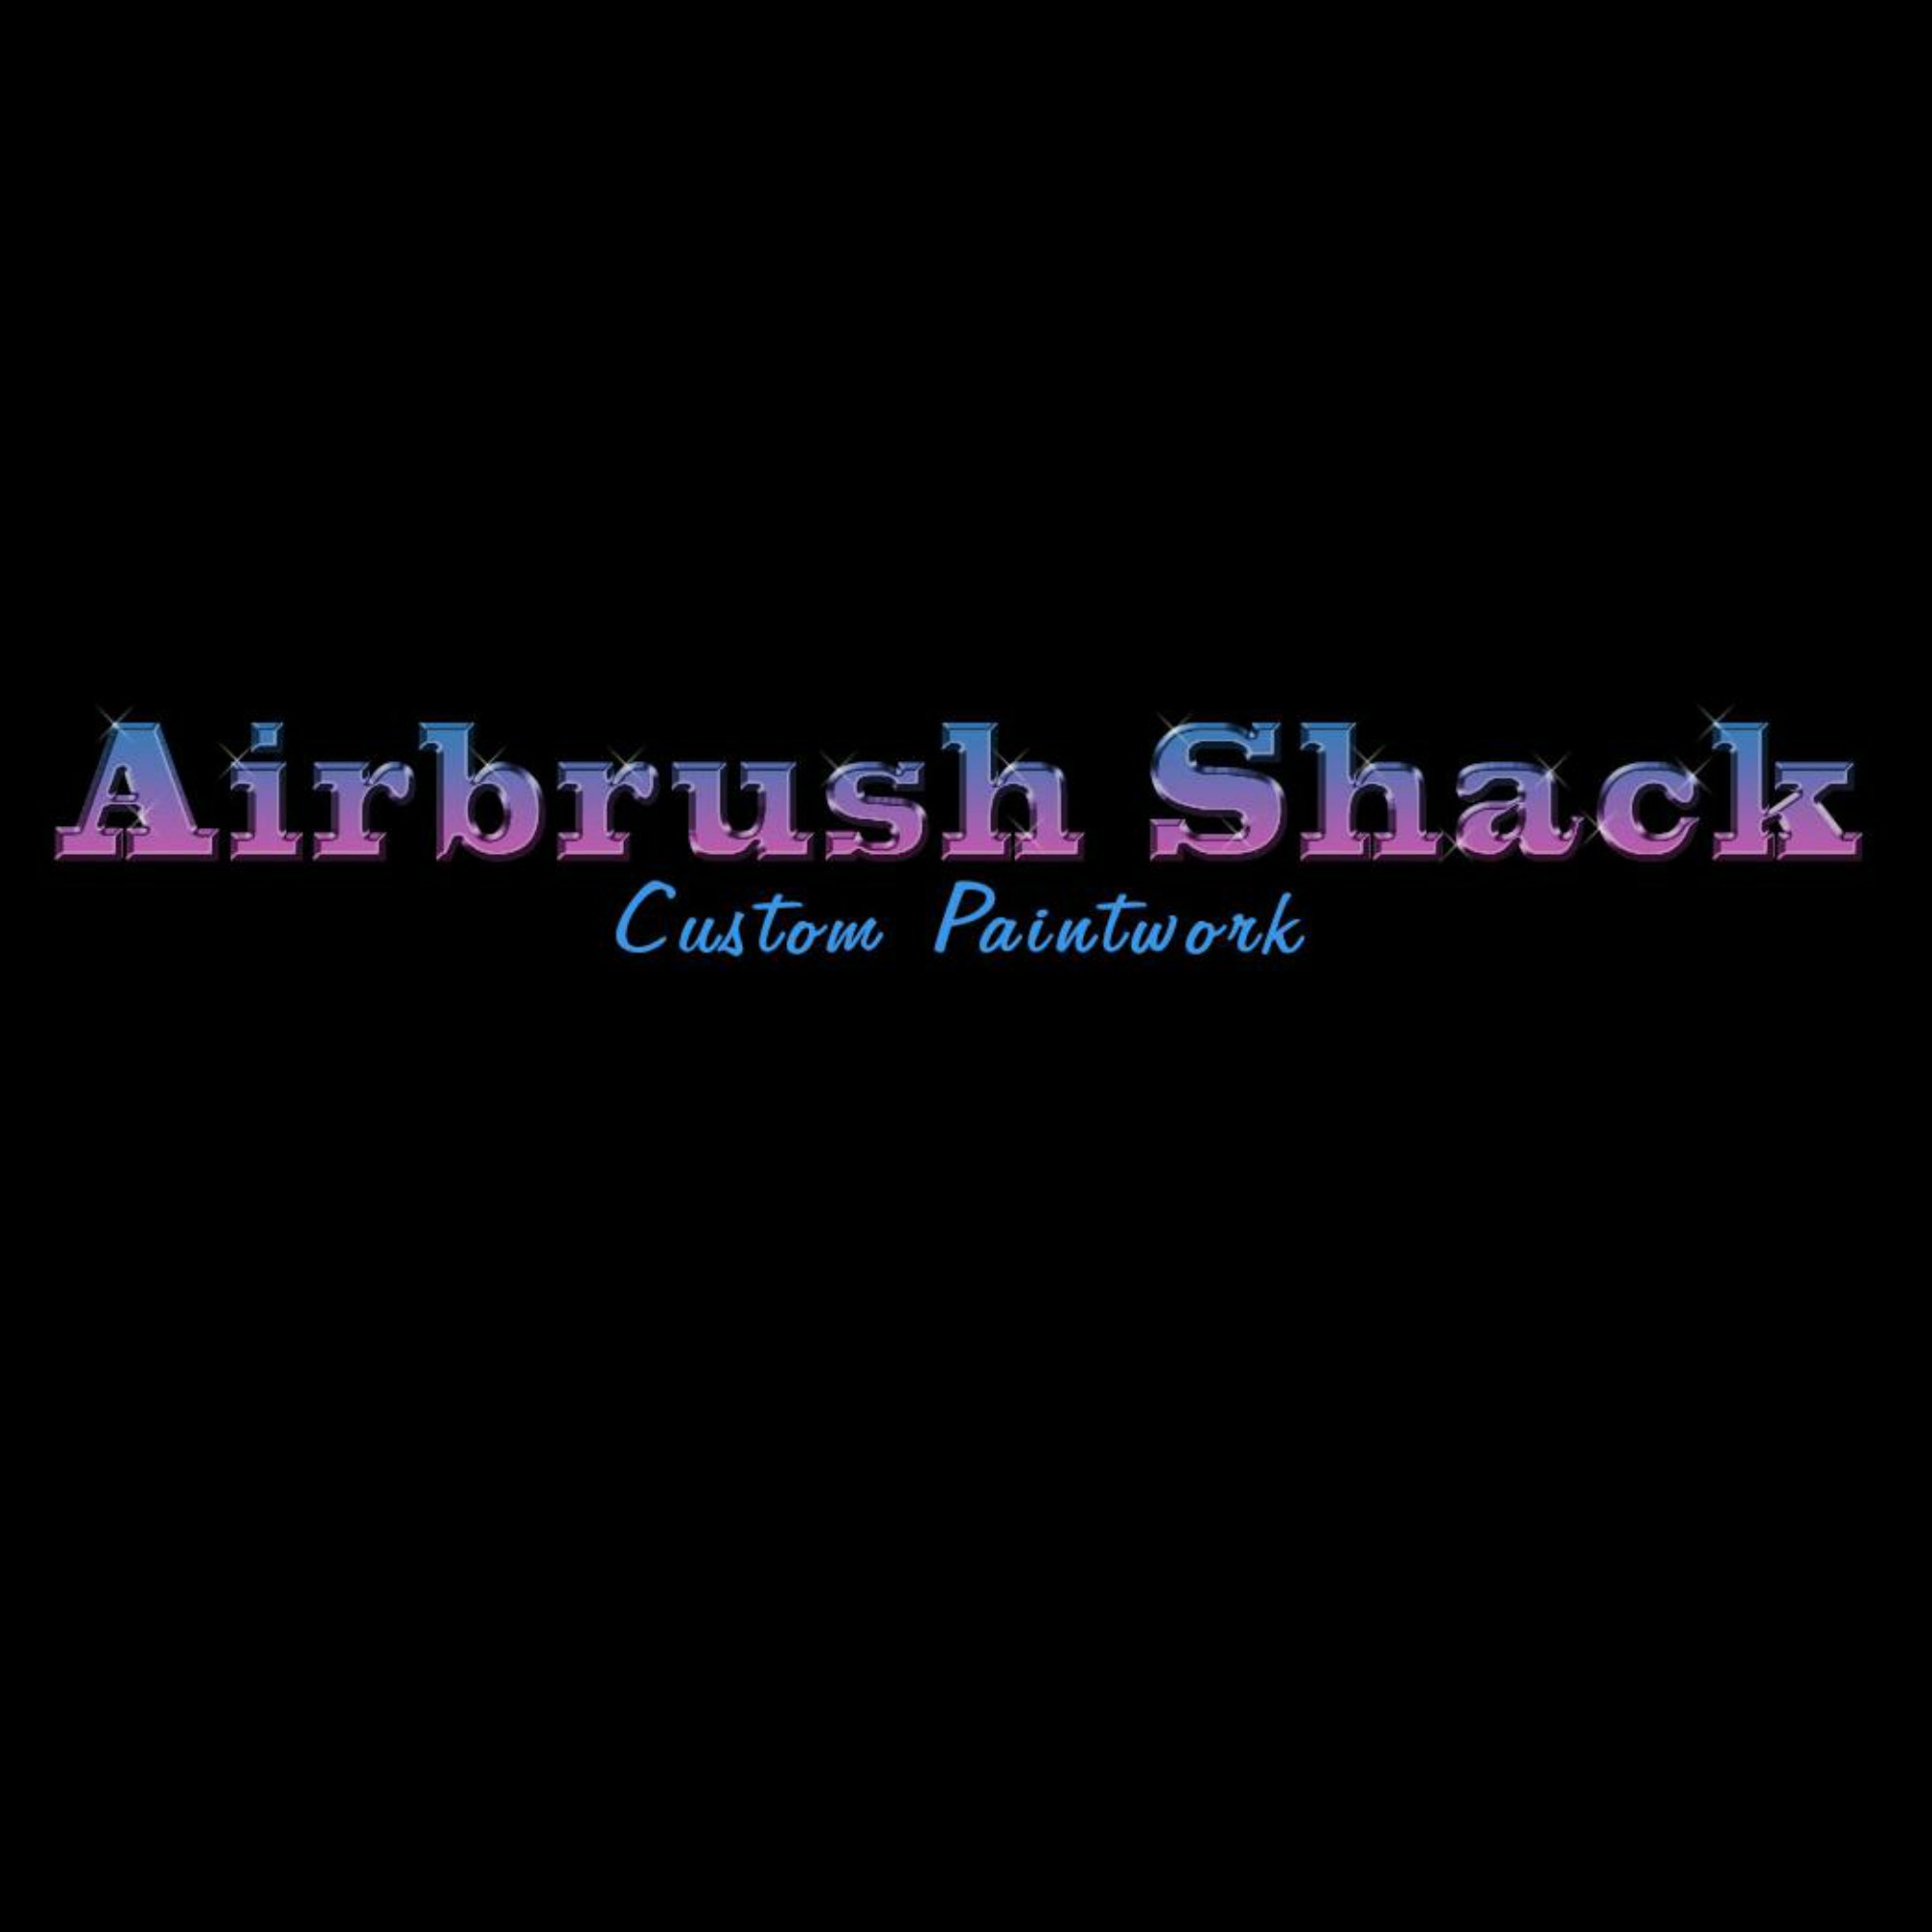 Airbrush Shack